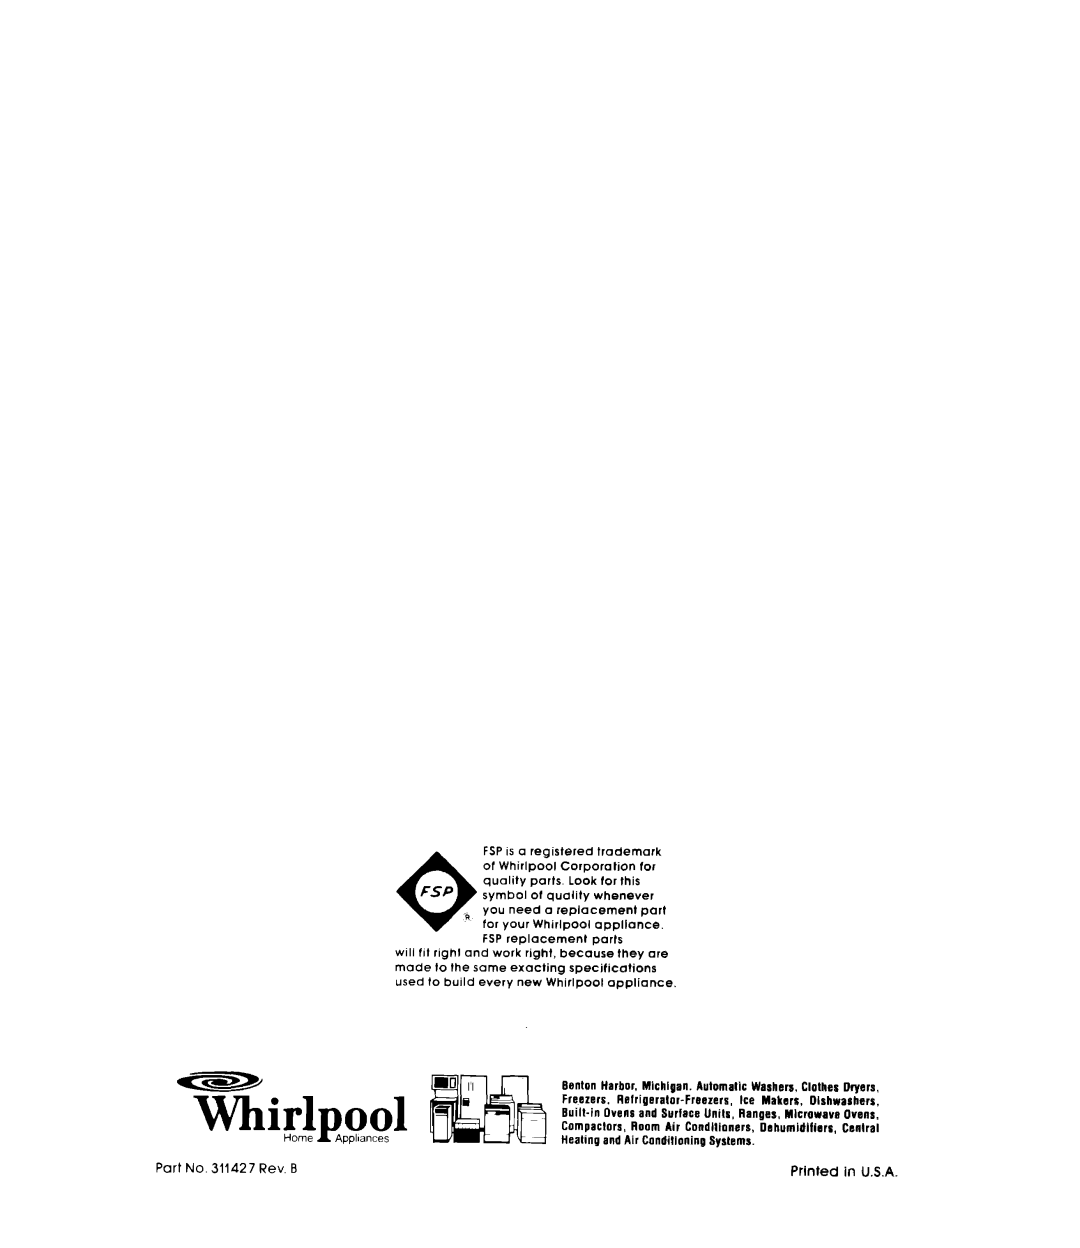 Whirlpool RM988PXK warranty Thpool, Part No. 311427 Rev. B, Printed in U.S.A 